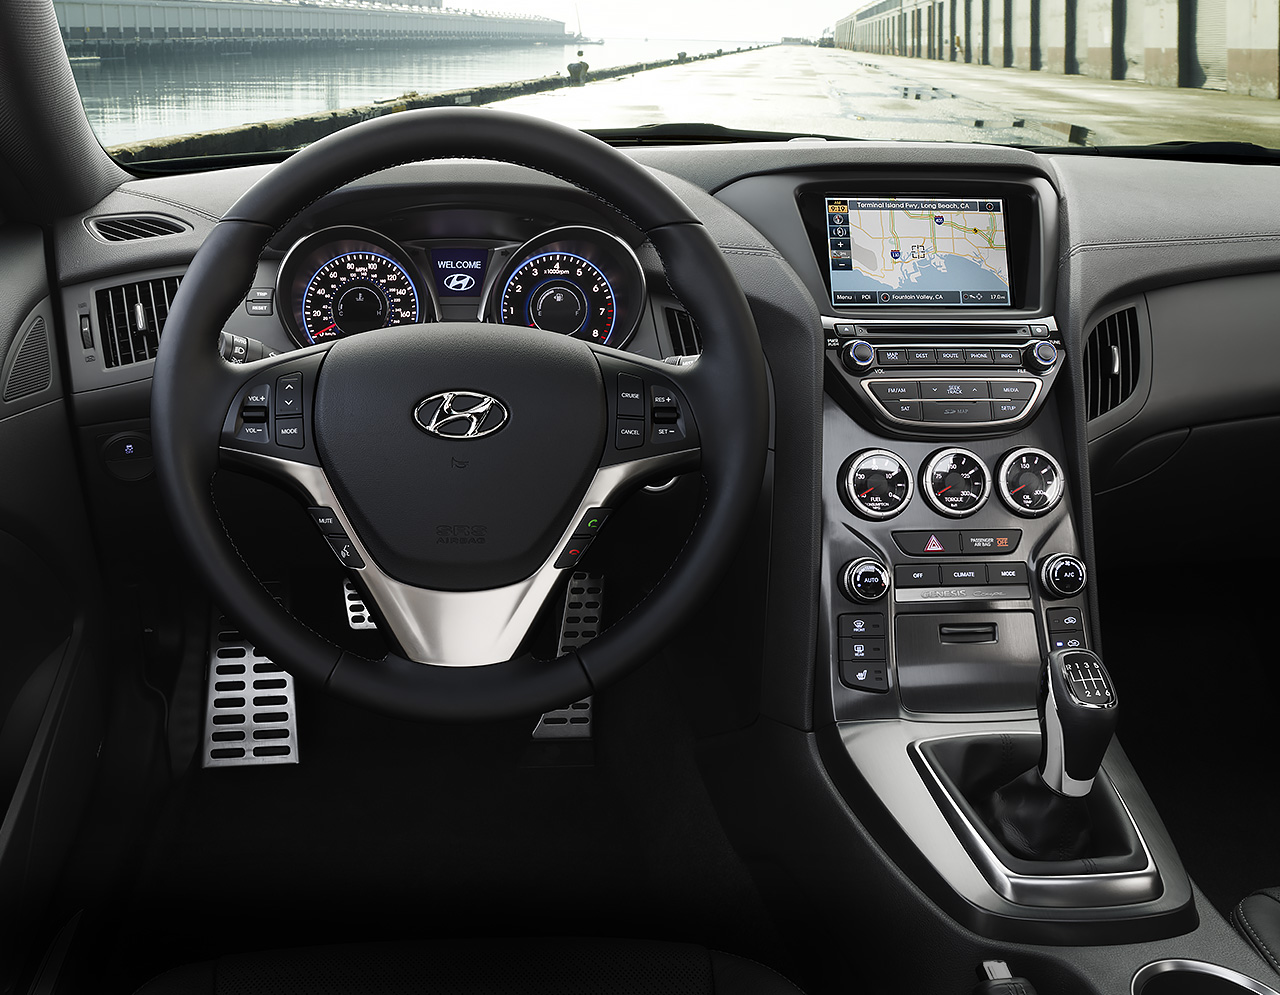 Hyundai Genesis Coupe HD wallpapers, Desktop wallpaper - most viewed